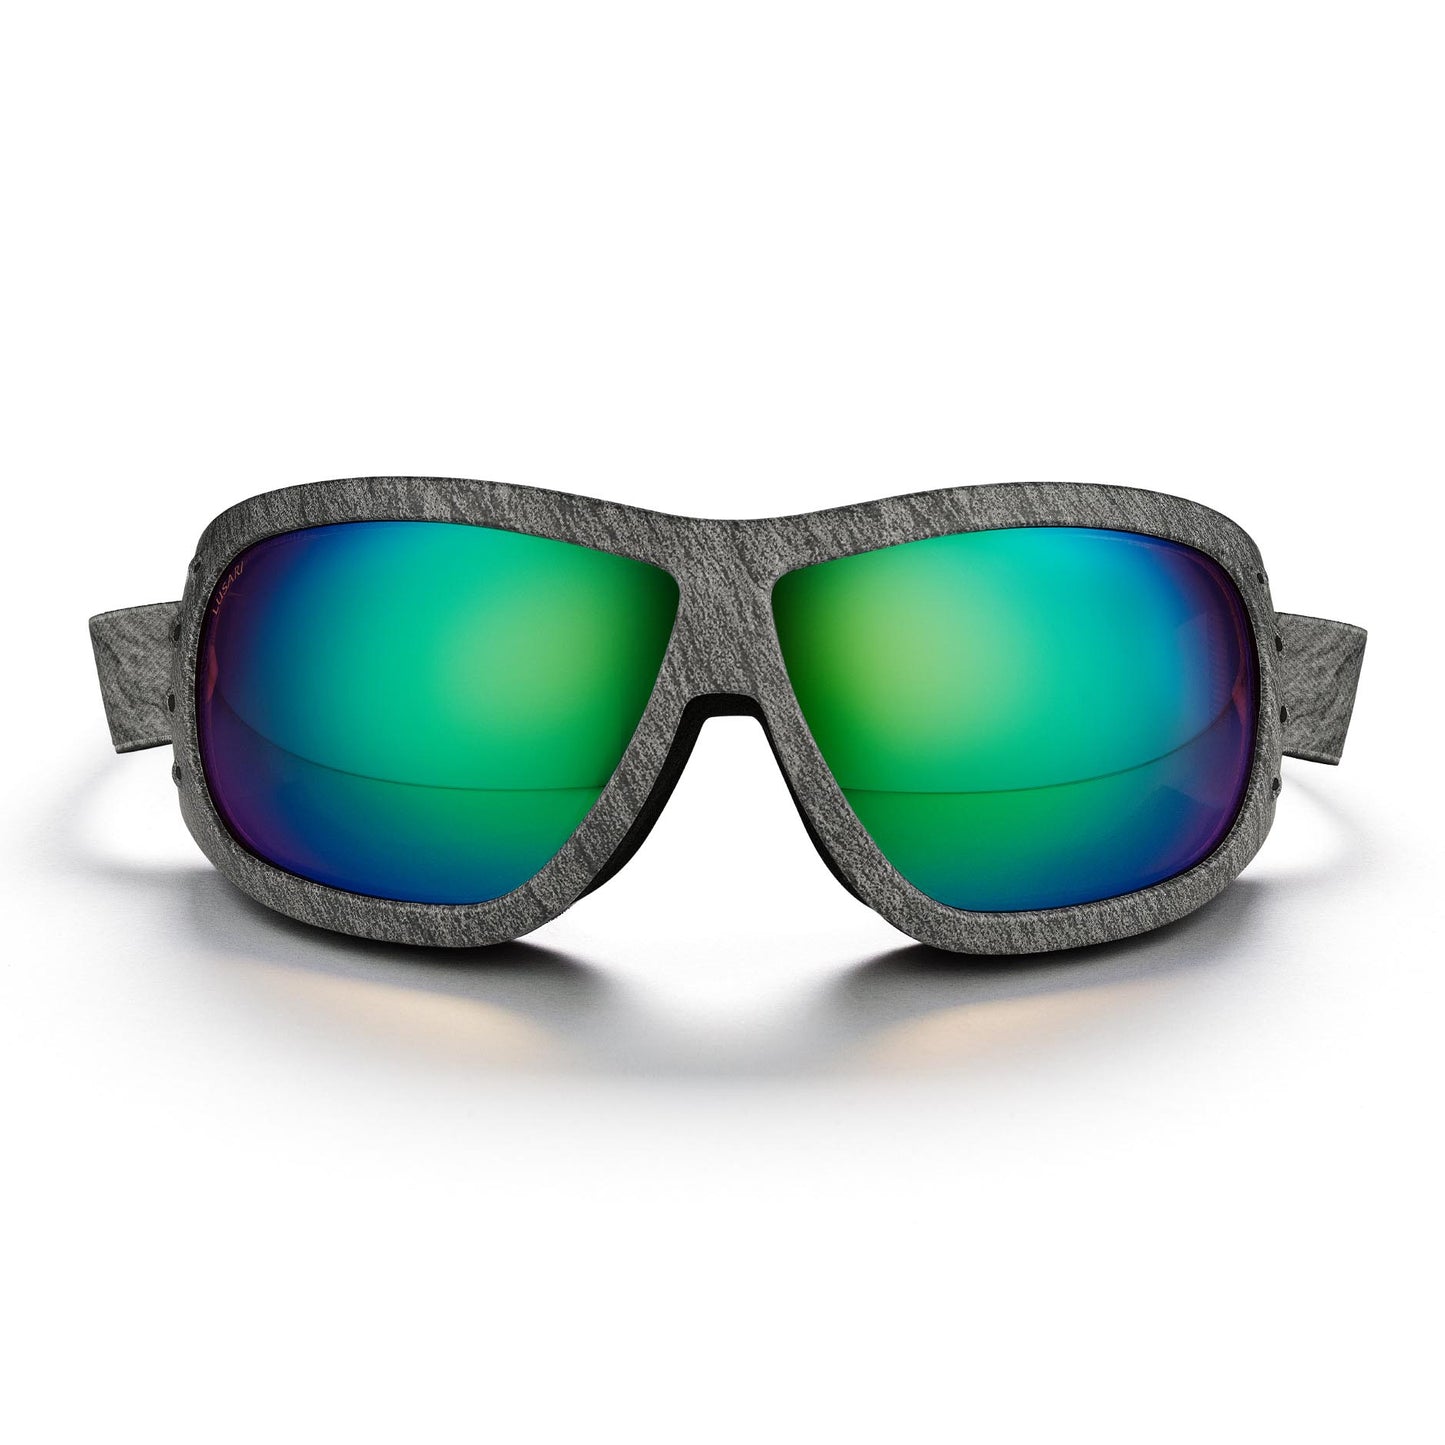 Slate/Emerald Goggles